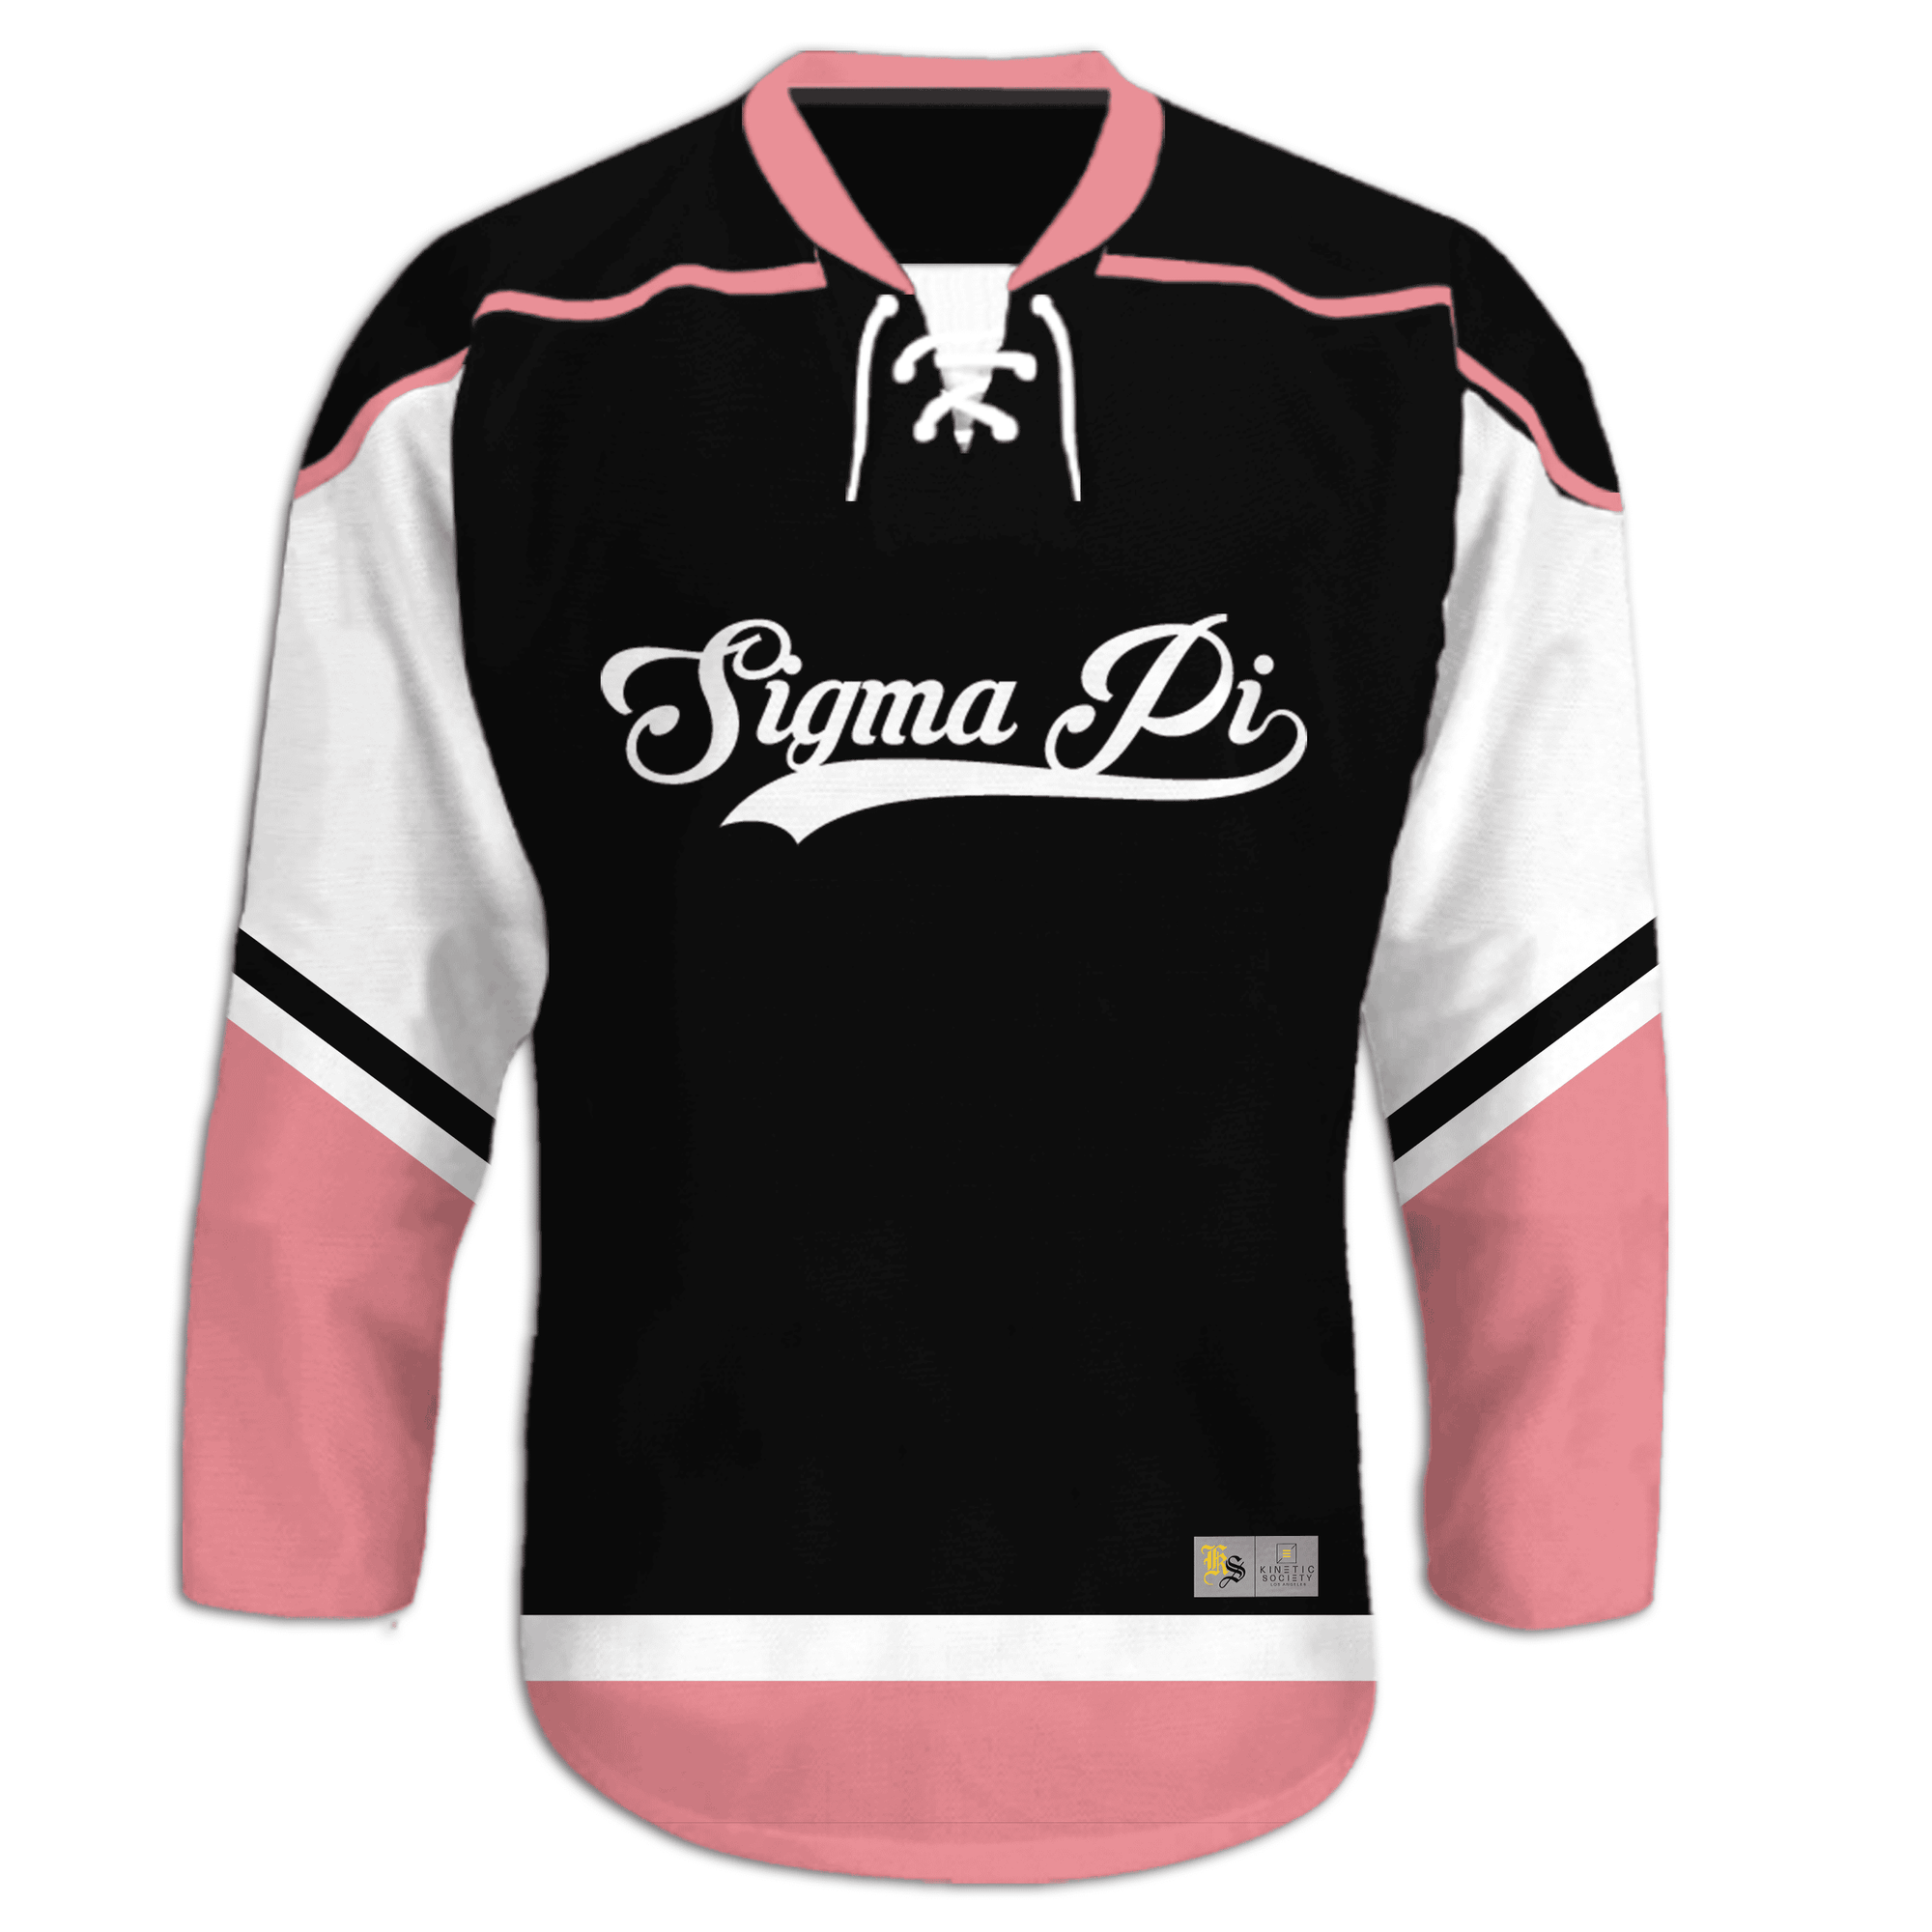 Sigma Pi - Black Pink - Hockey Jersey